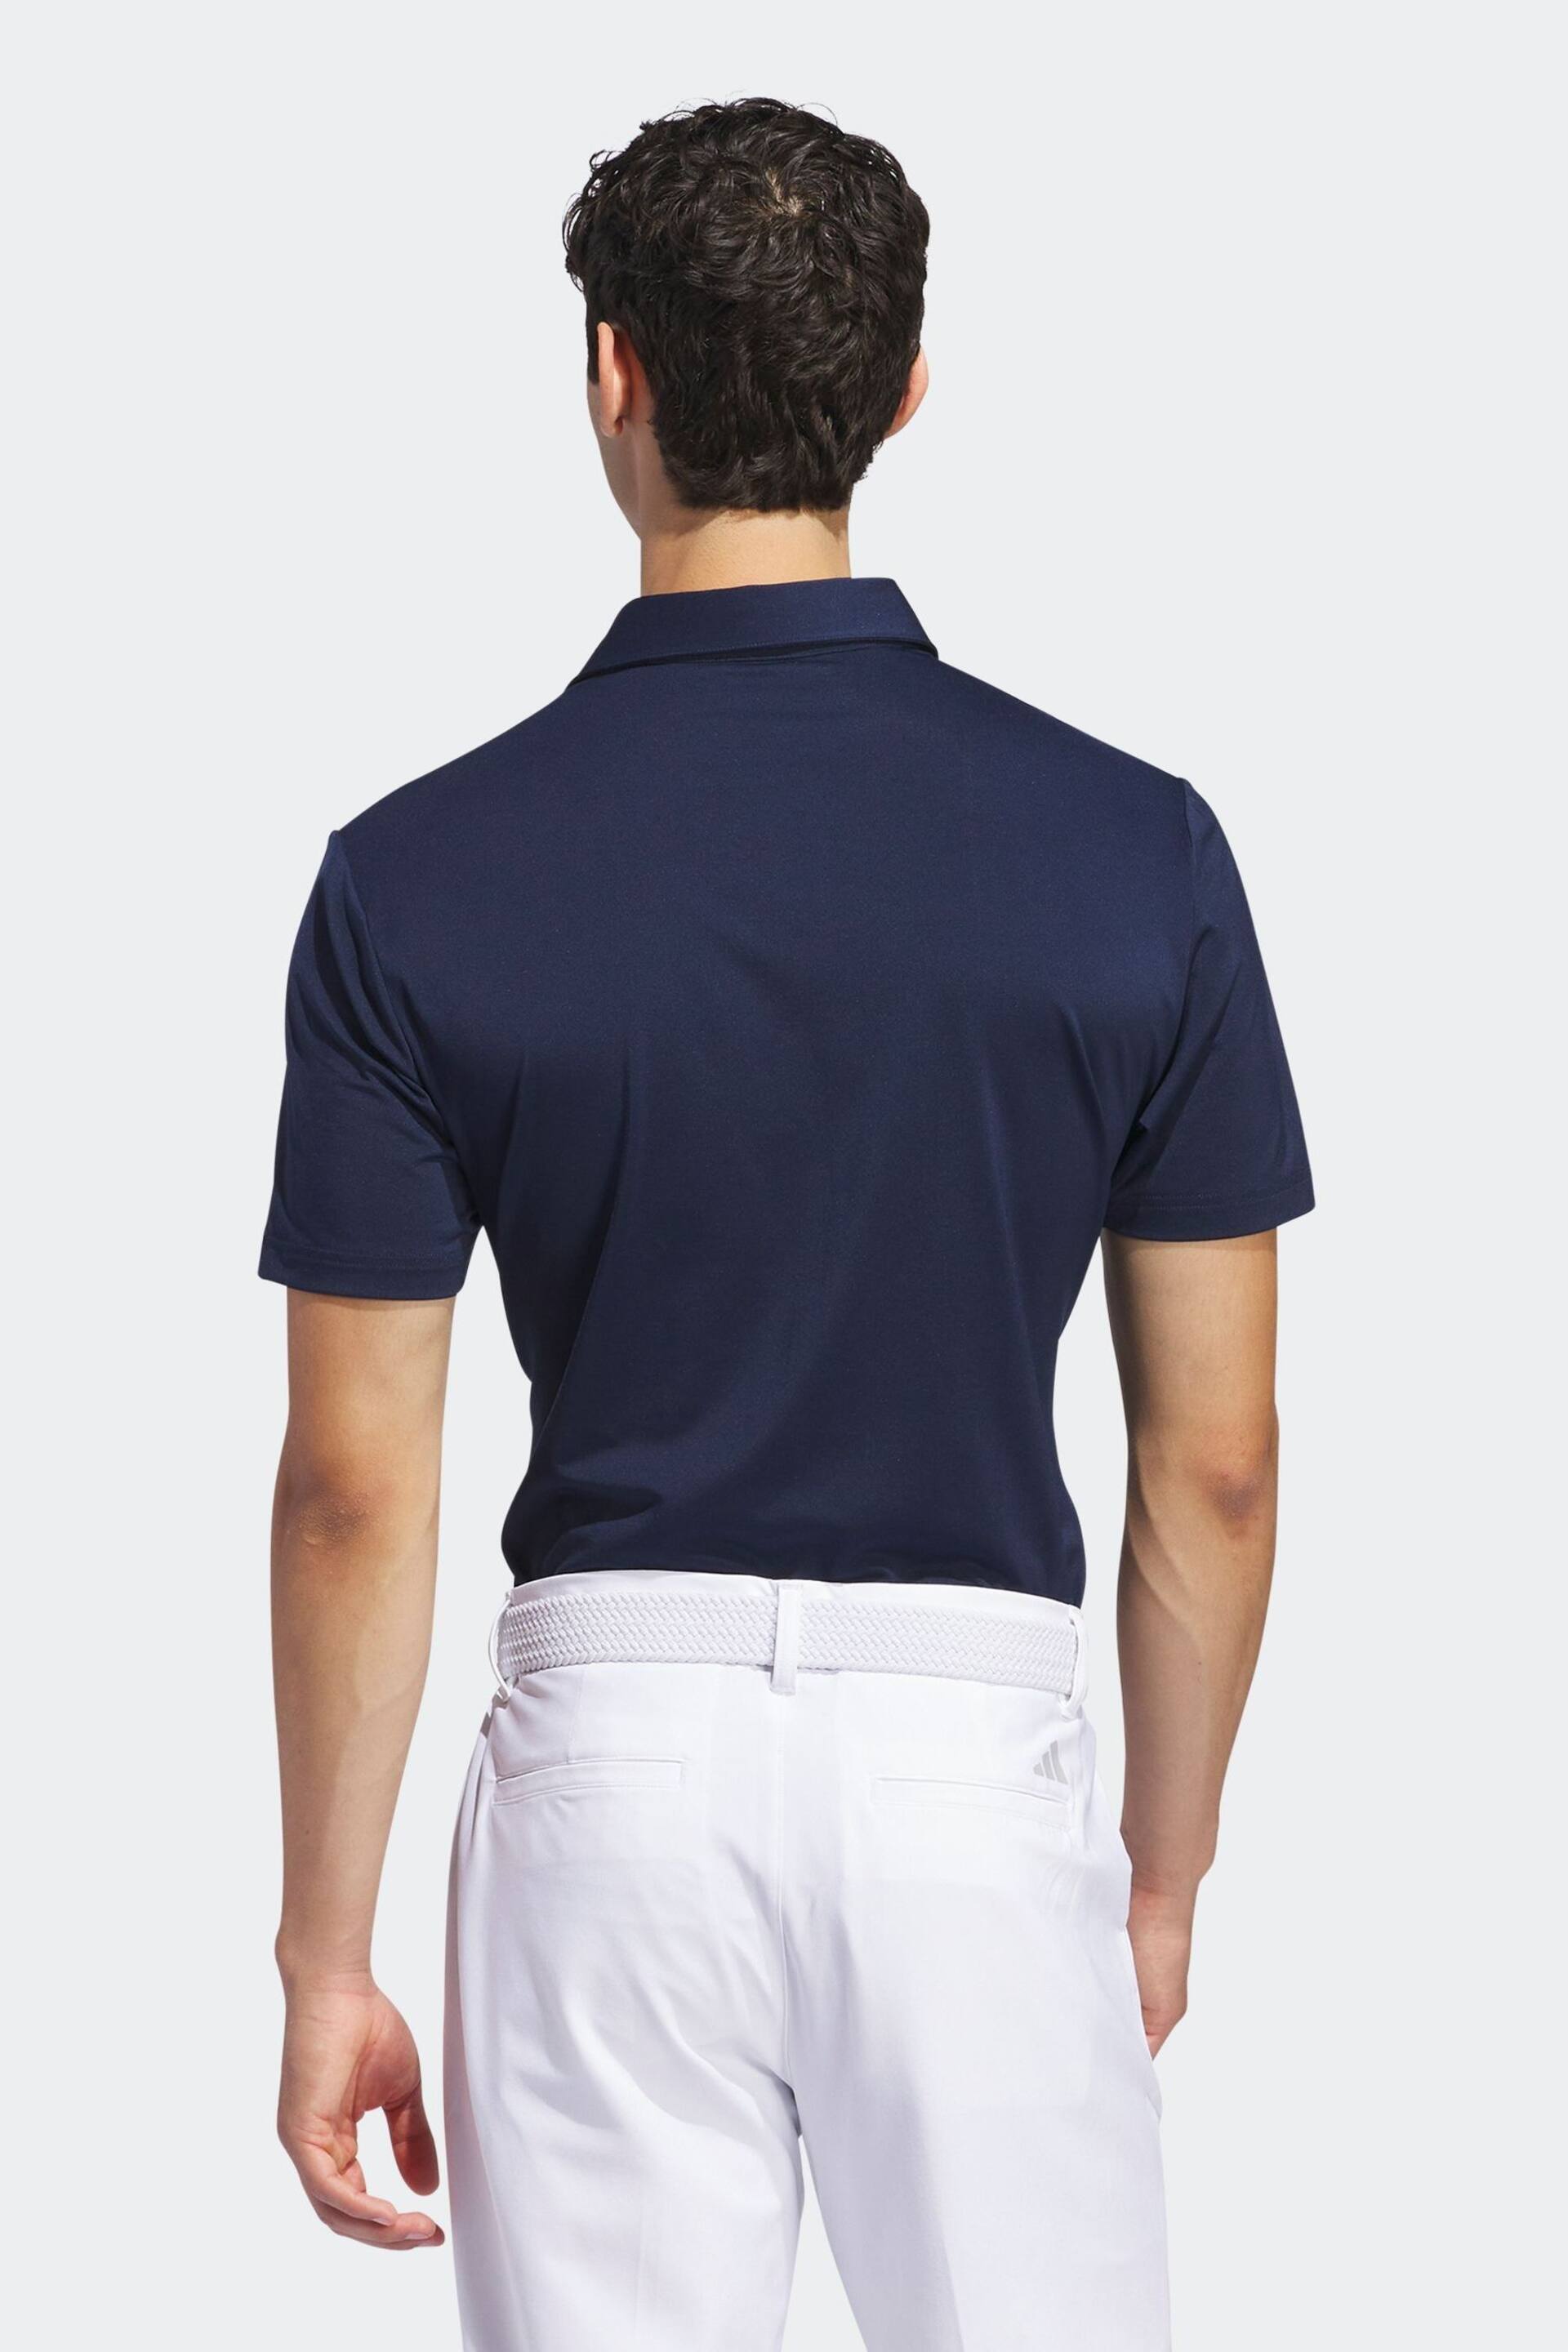 adidas Golf Ultimate365 Solid Polo Shirt - Image 2 of 7